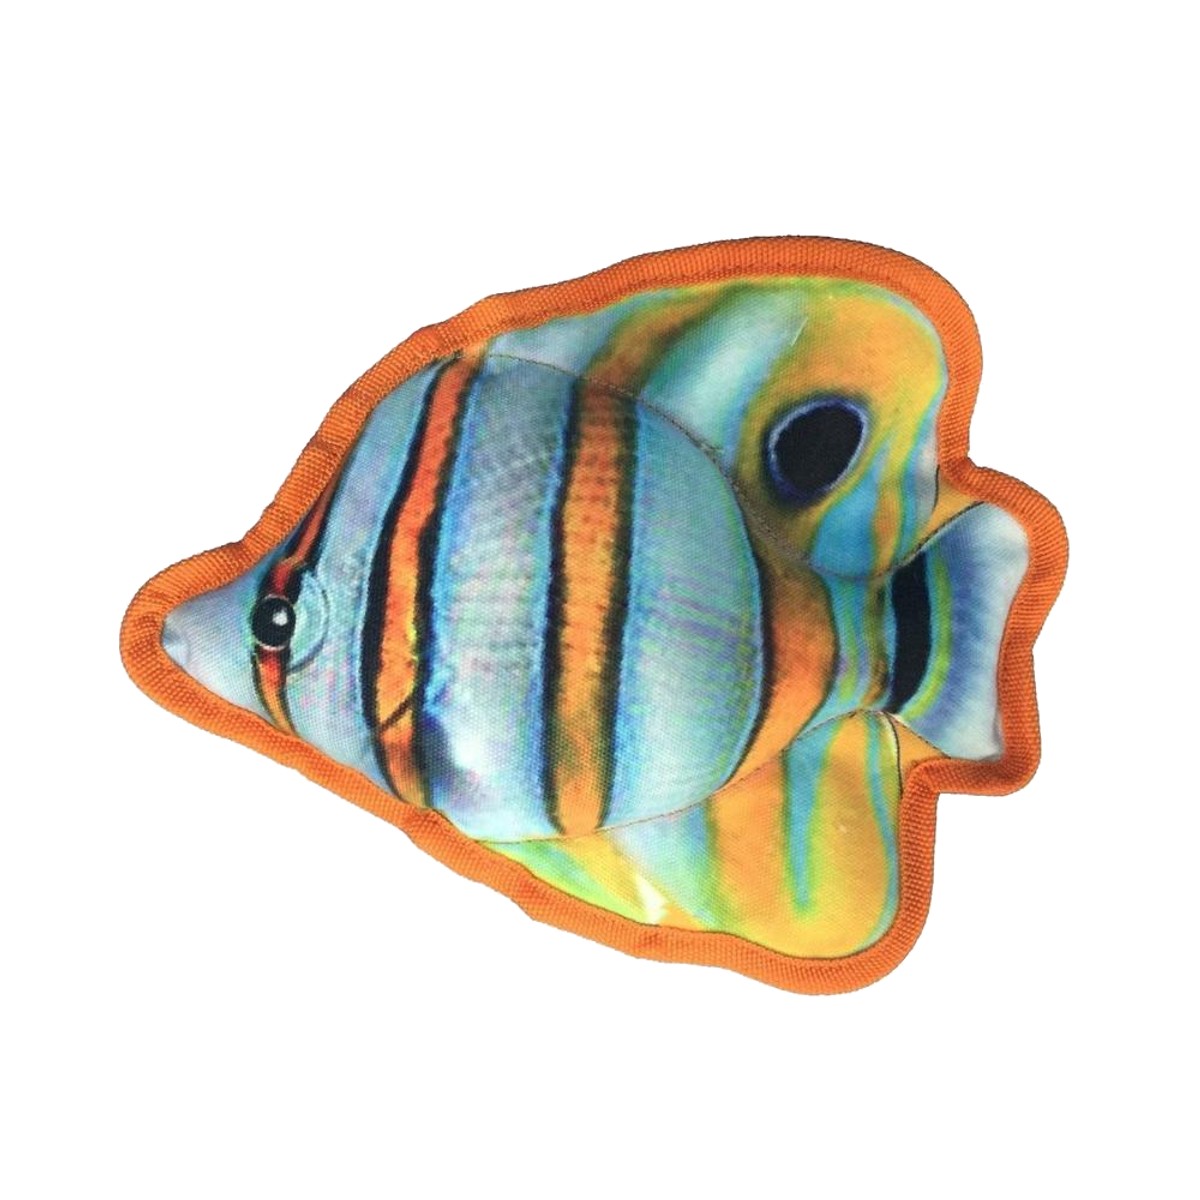 Dogline Tropical Fish Dog Toy - Butterflyfish